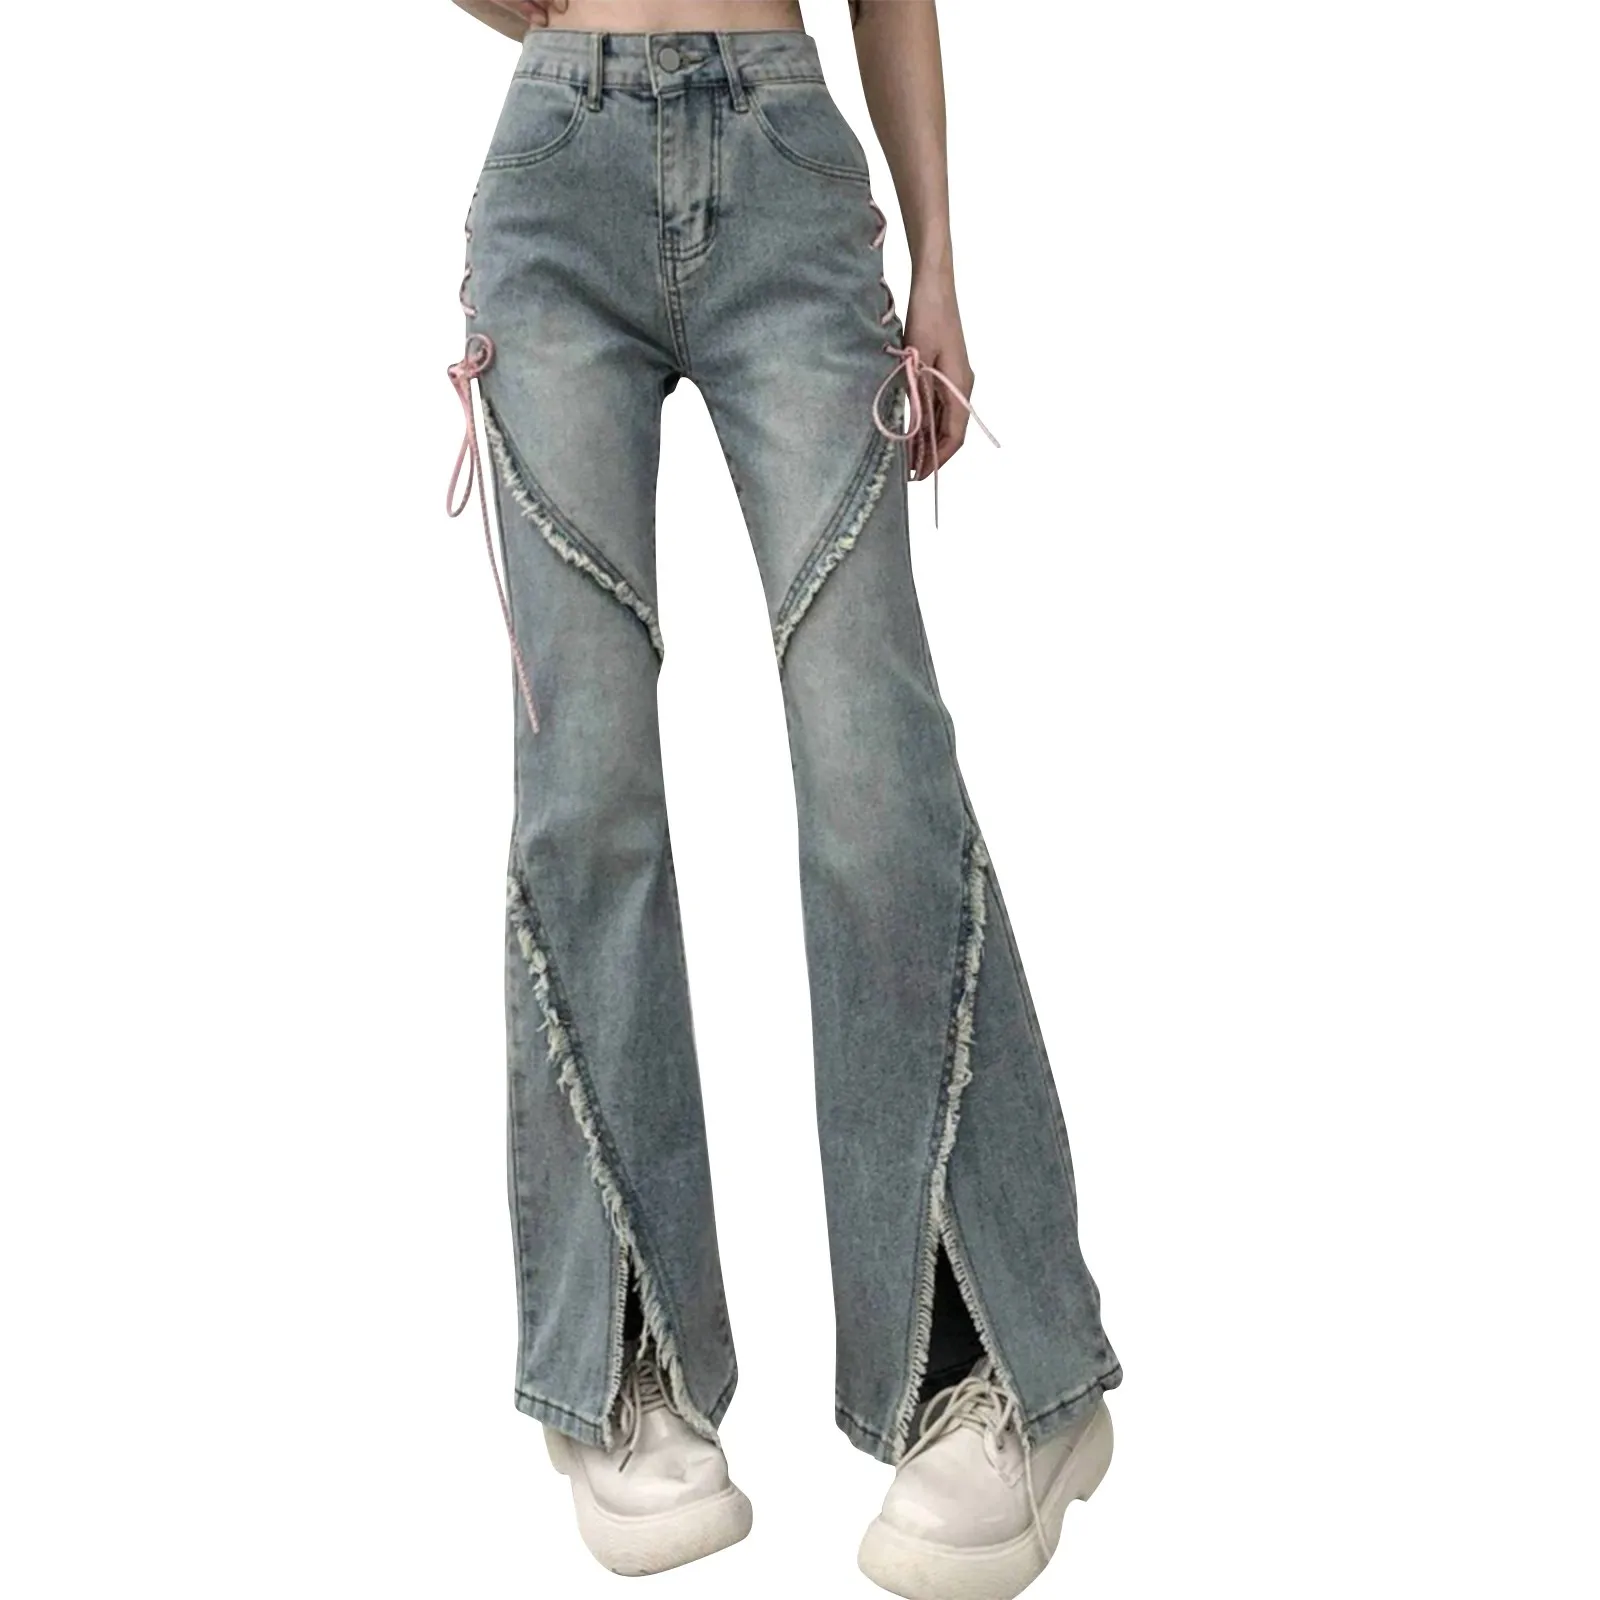 Fashion Women Slim Jeans Straight High Waist Casual Trousers брюки женские ensembles pantalons pantalones de mujer 여성가을옷